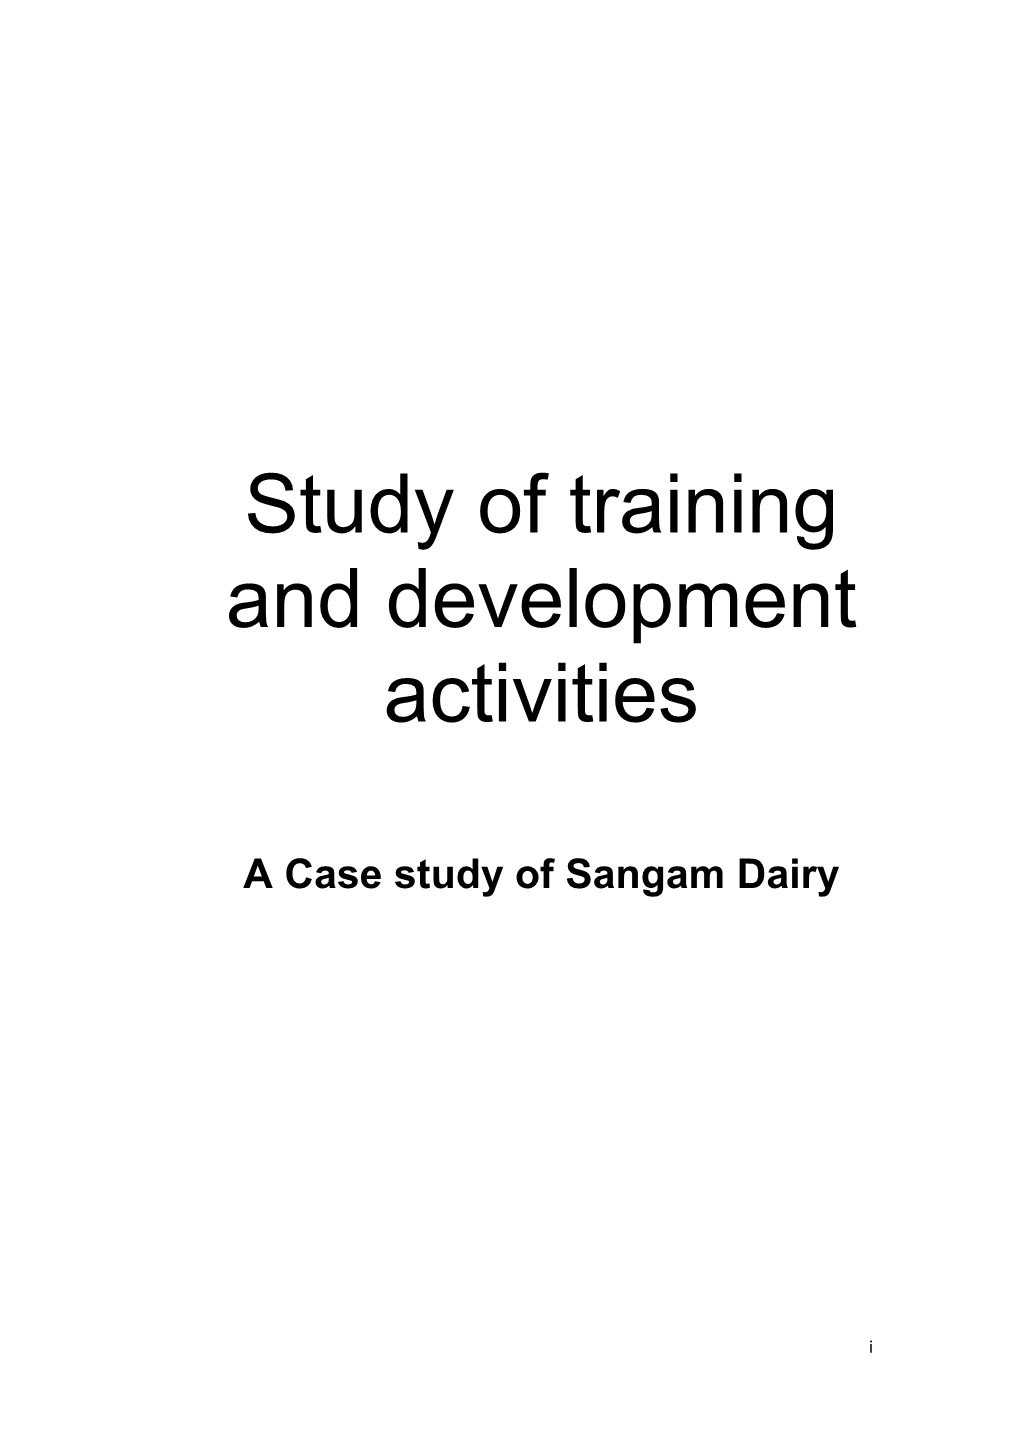 Study of Training and Development Activities